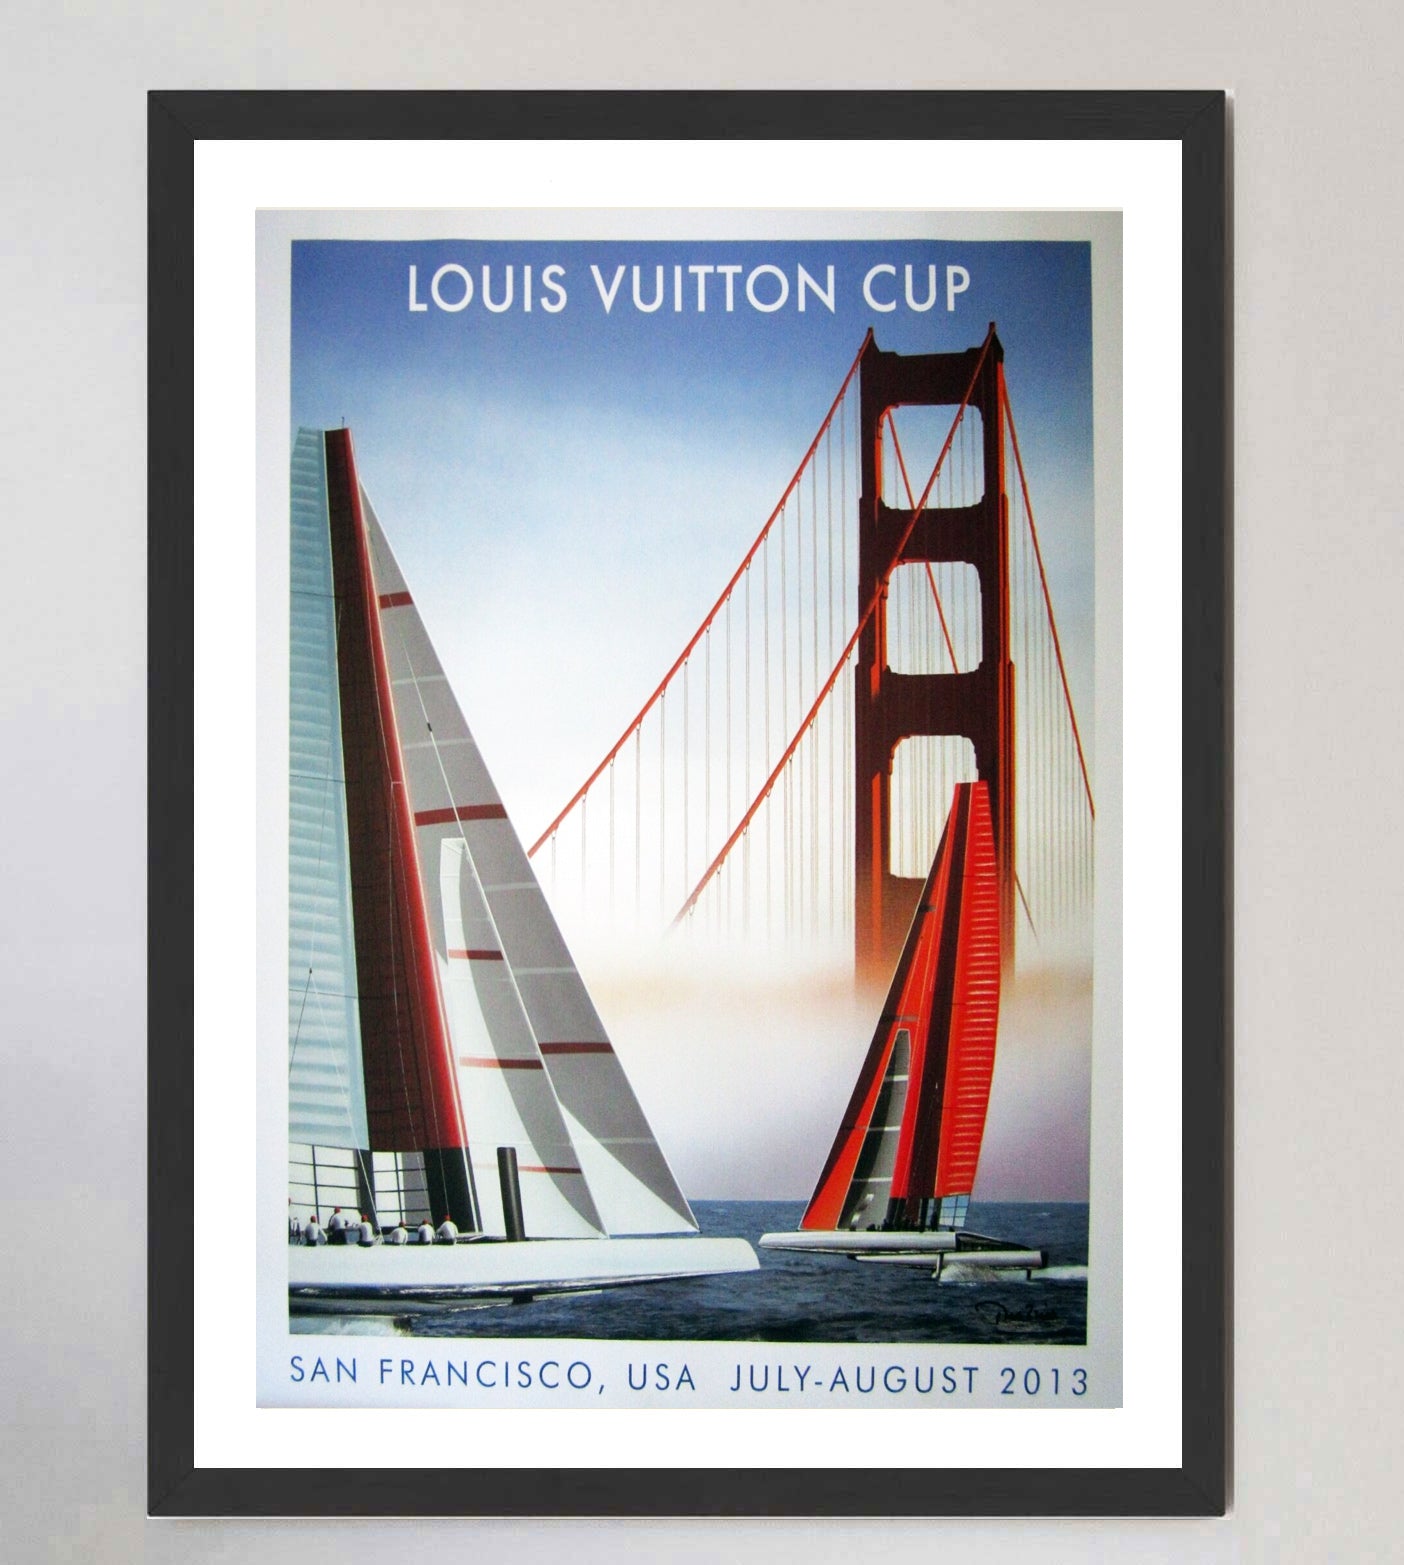 Louis Vuitton Cup, San Francisco, 2013 large poster by Razzia - l